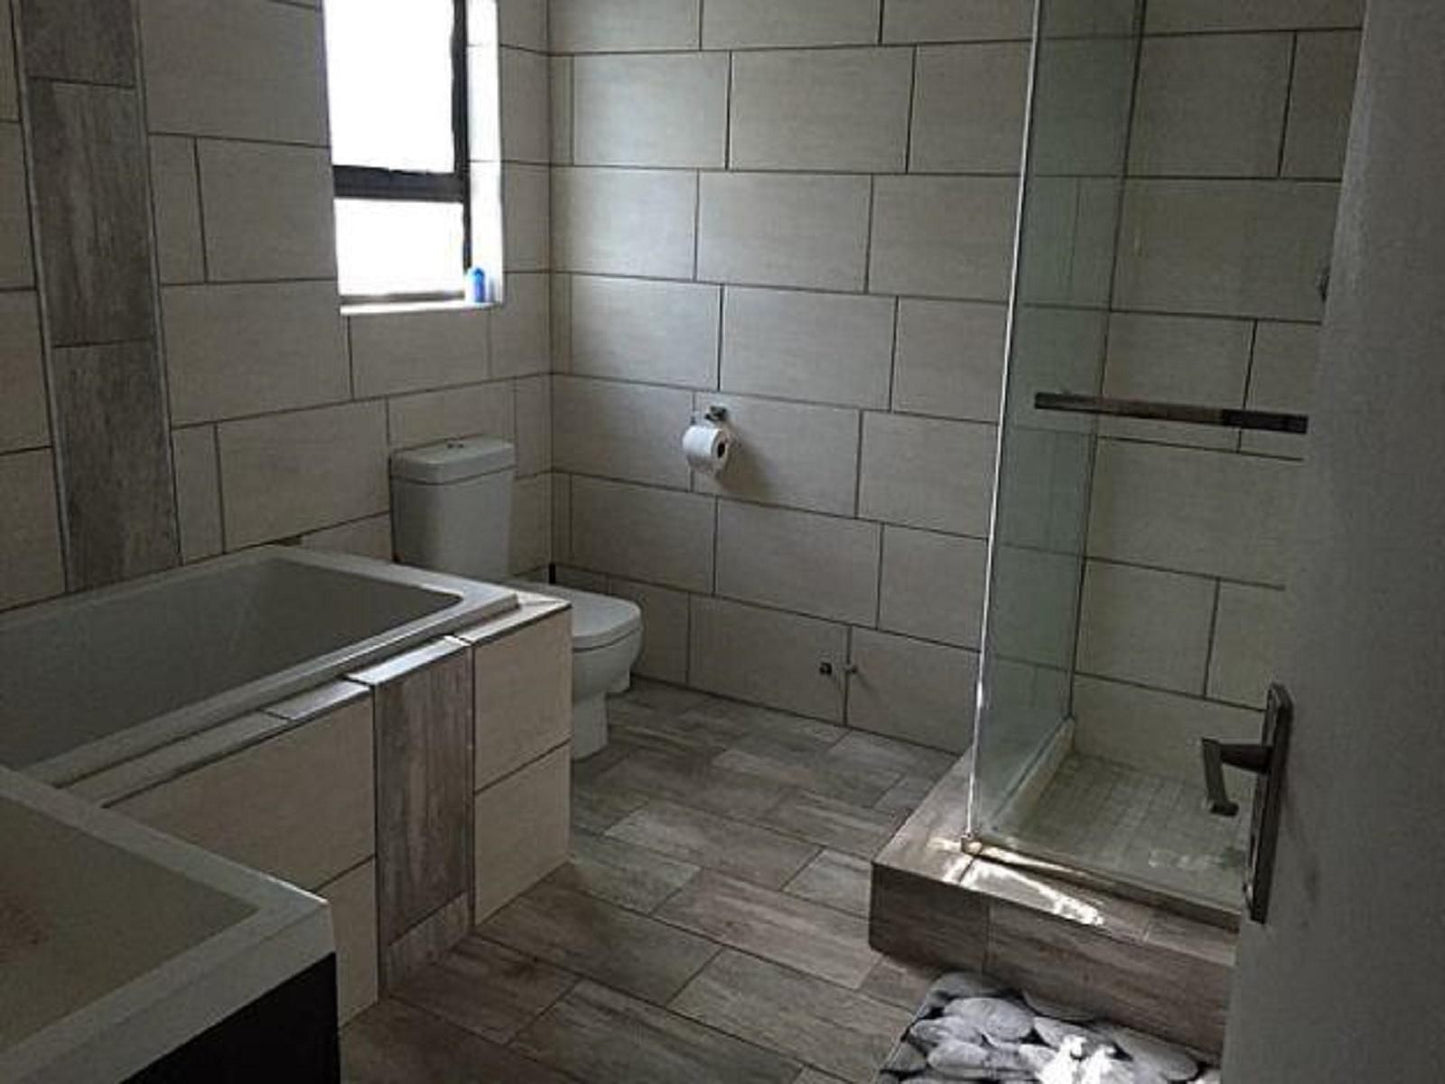 94Onwild Waterkloof Pretoria Tshwane Gauteng South Africa Colorless, Bathroom